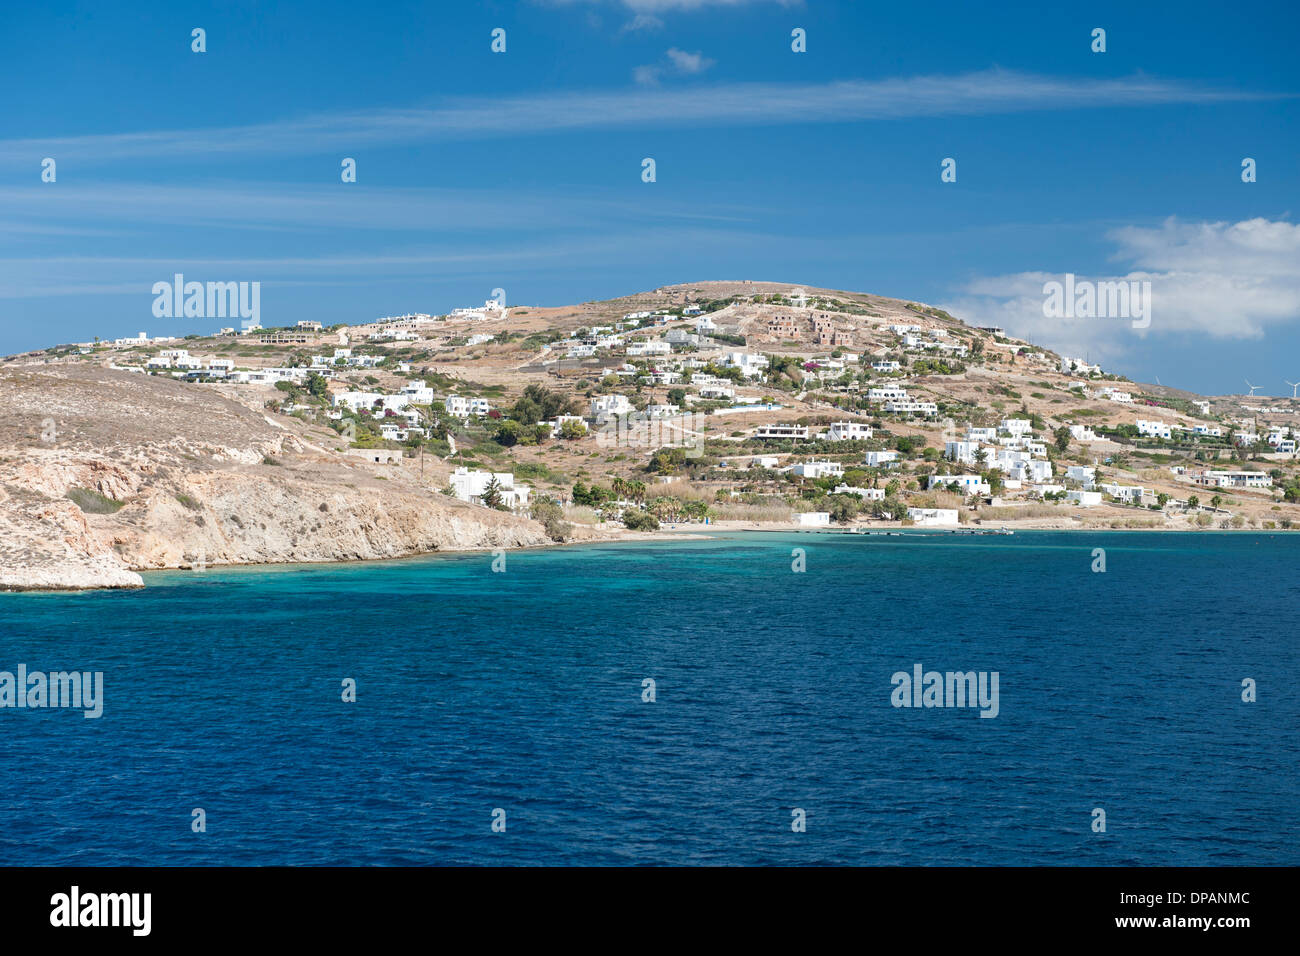 The Greek island of Paros in the Aegean Sea. Stock Photo